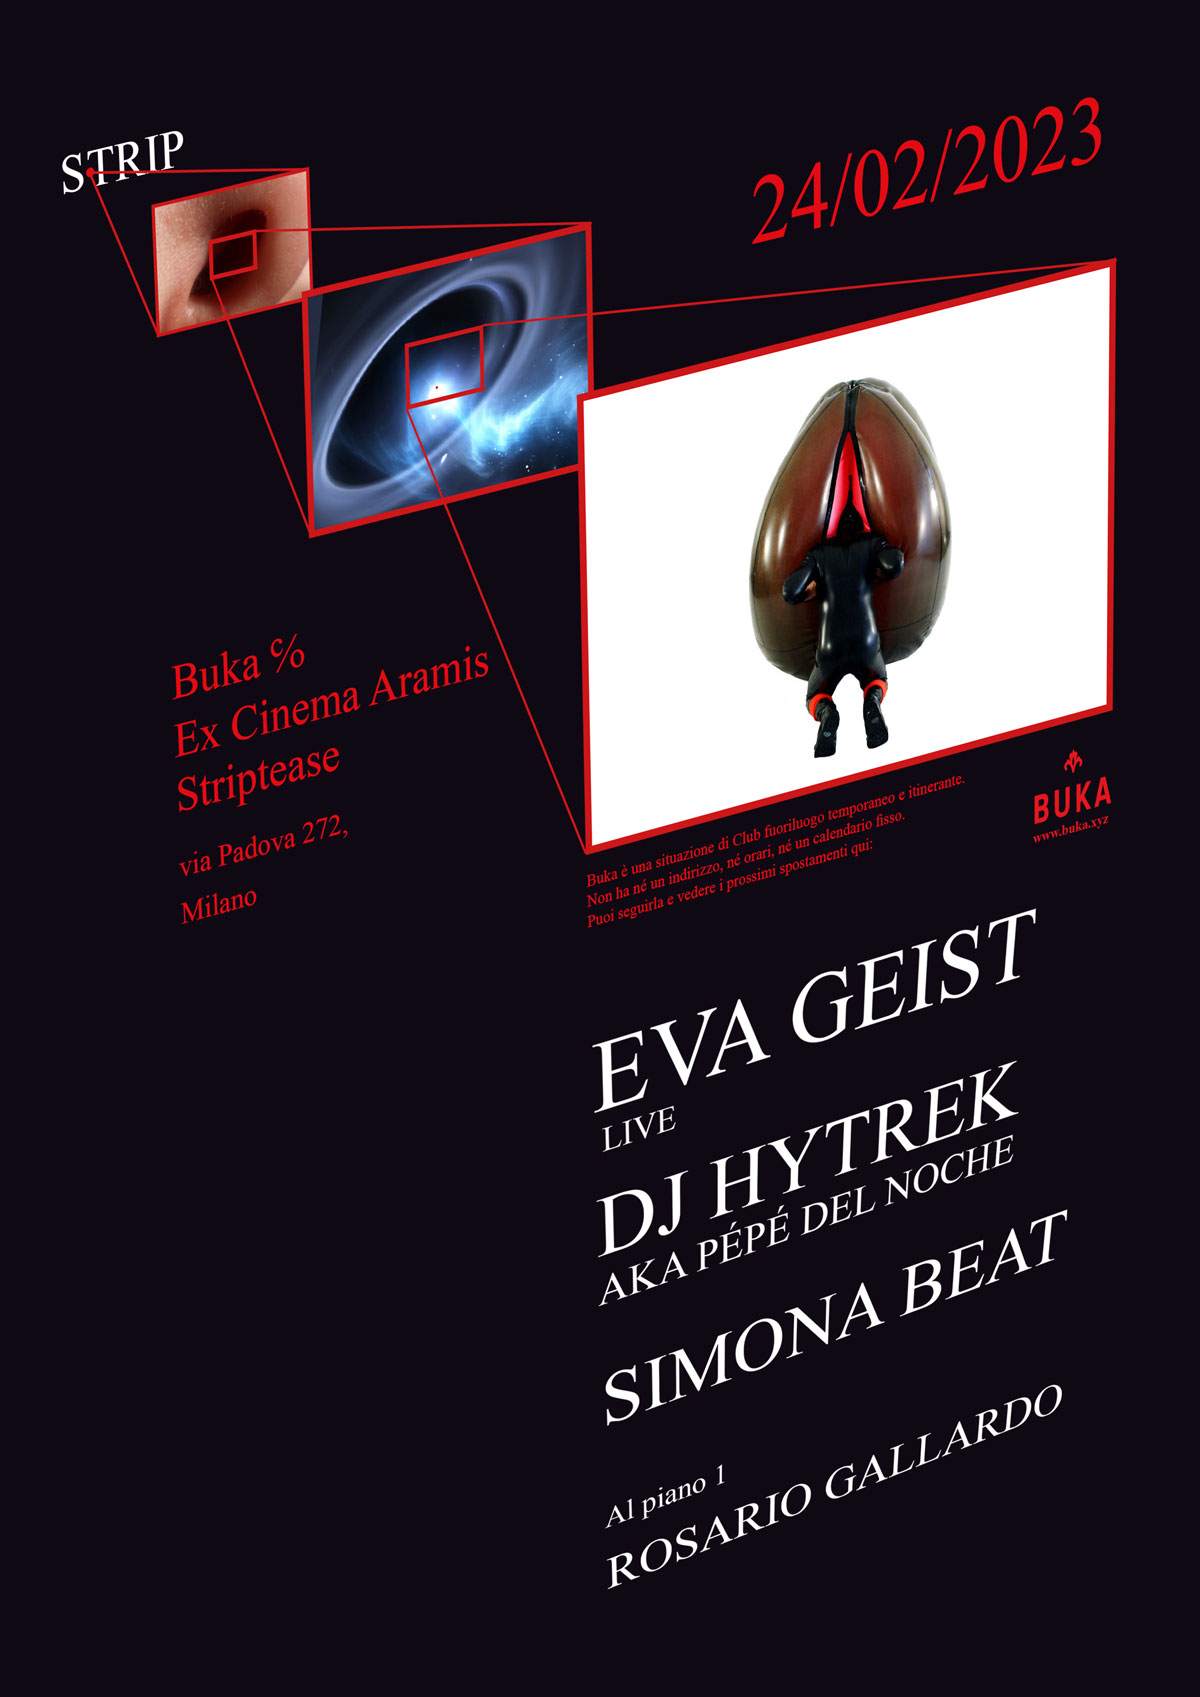 BUKA - Strip: Eva Geist (live), Dj Hytrek a.k.a Pépé Del Noche, Simona Beat, Rosario Gallardo - Página frontal